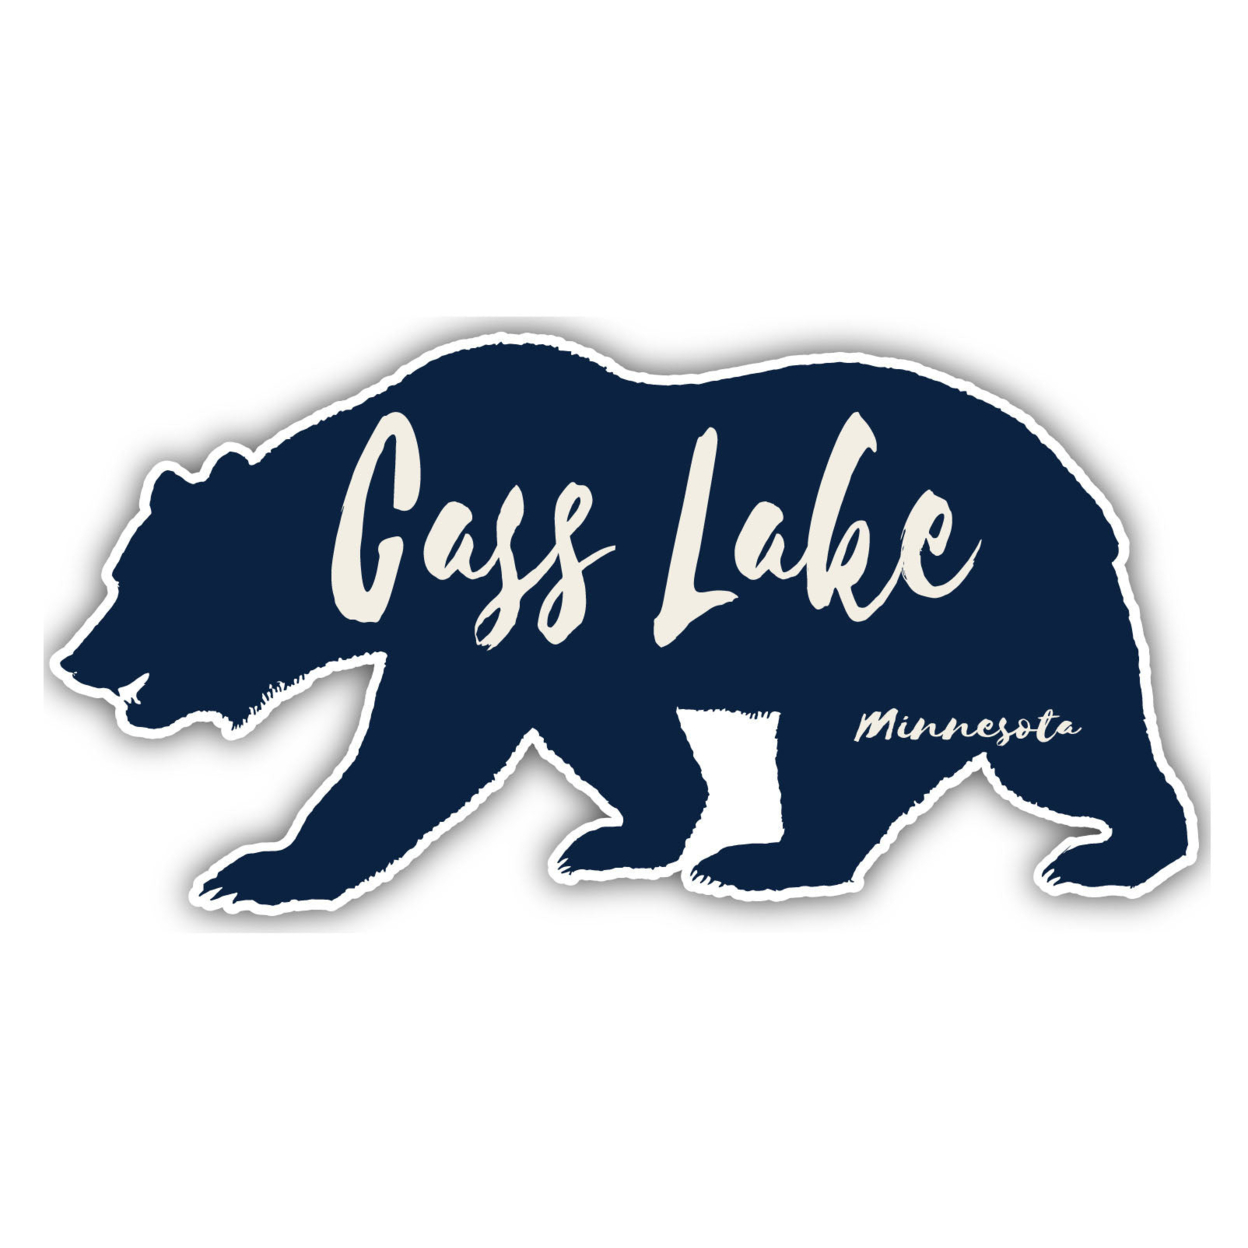 Cass Lake Minnesota Souvenir Decorative Stickers (Choose Theme And Size) - Single Unit, 8-Inch, Camp Life